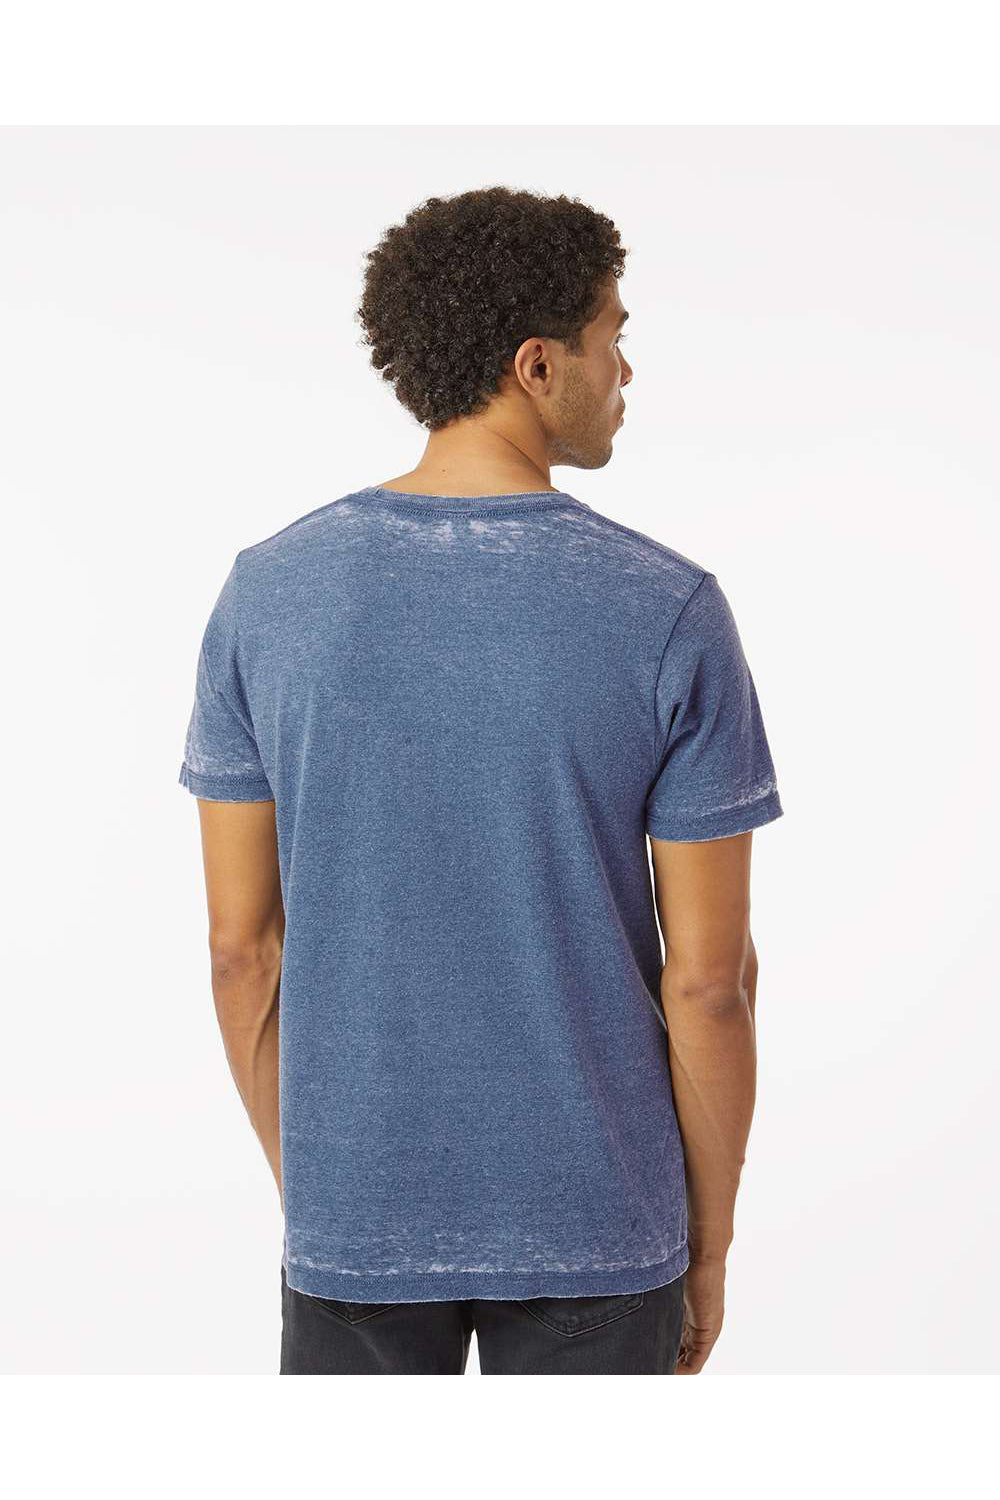 Colortone 1350 Mens Acid Wash Burnout Short Sleeve Crewneck T-Shirt Denim Blue Model Back